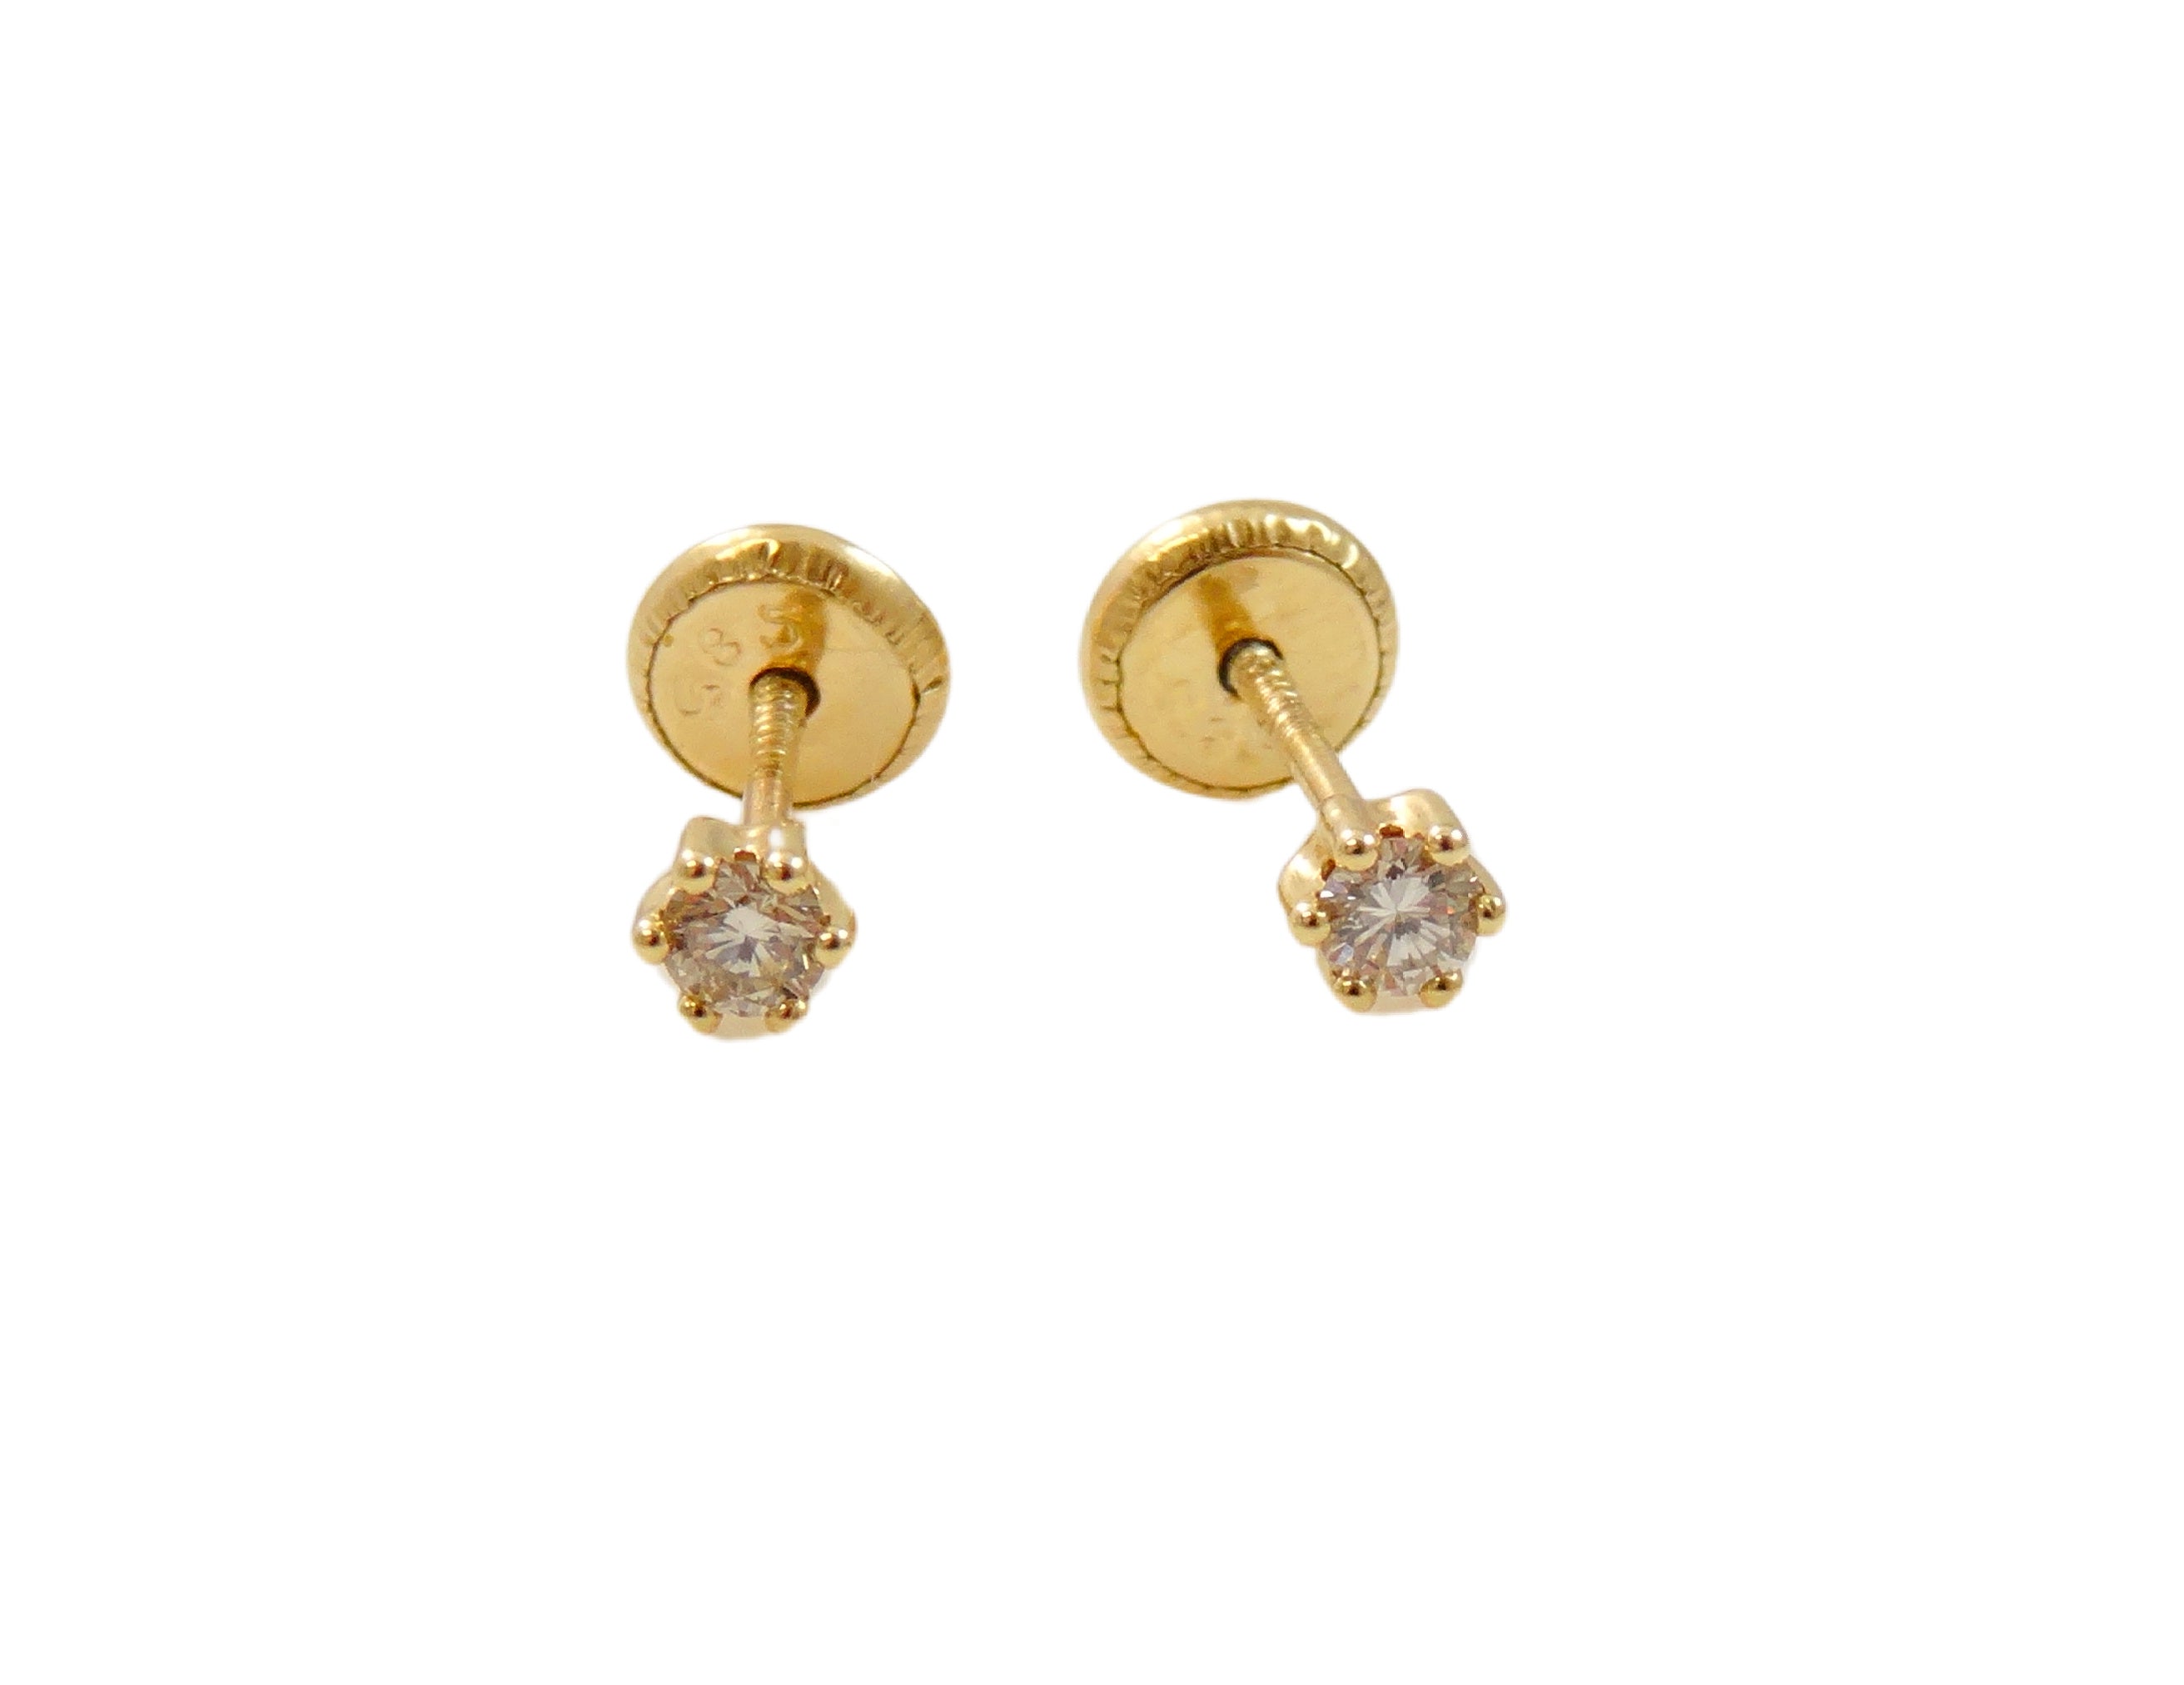 Buy First Quality White Stone 2 Gram Gold Earrings for Baby Girl